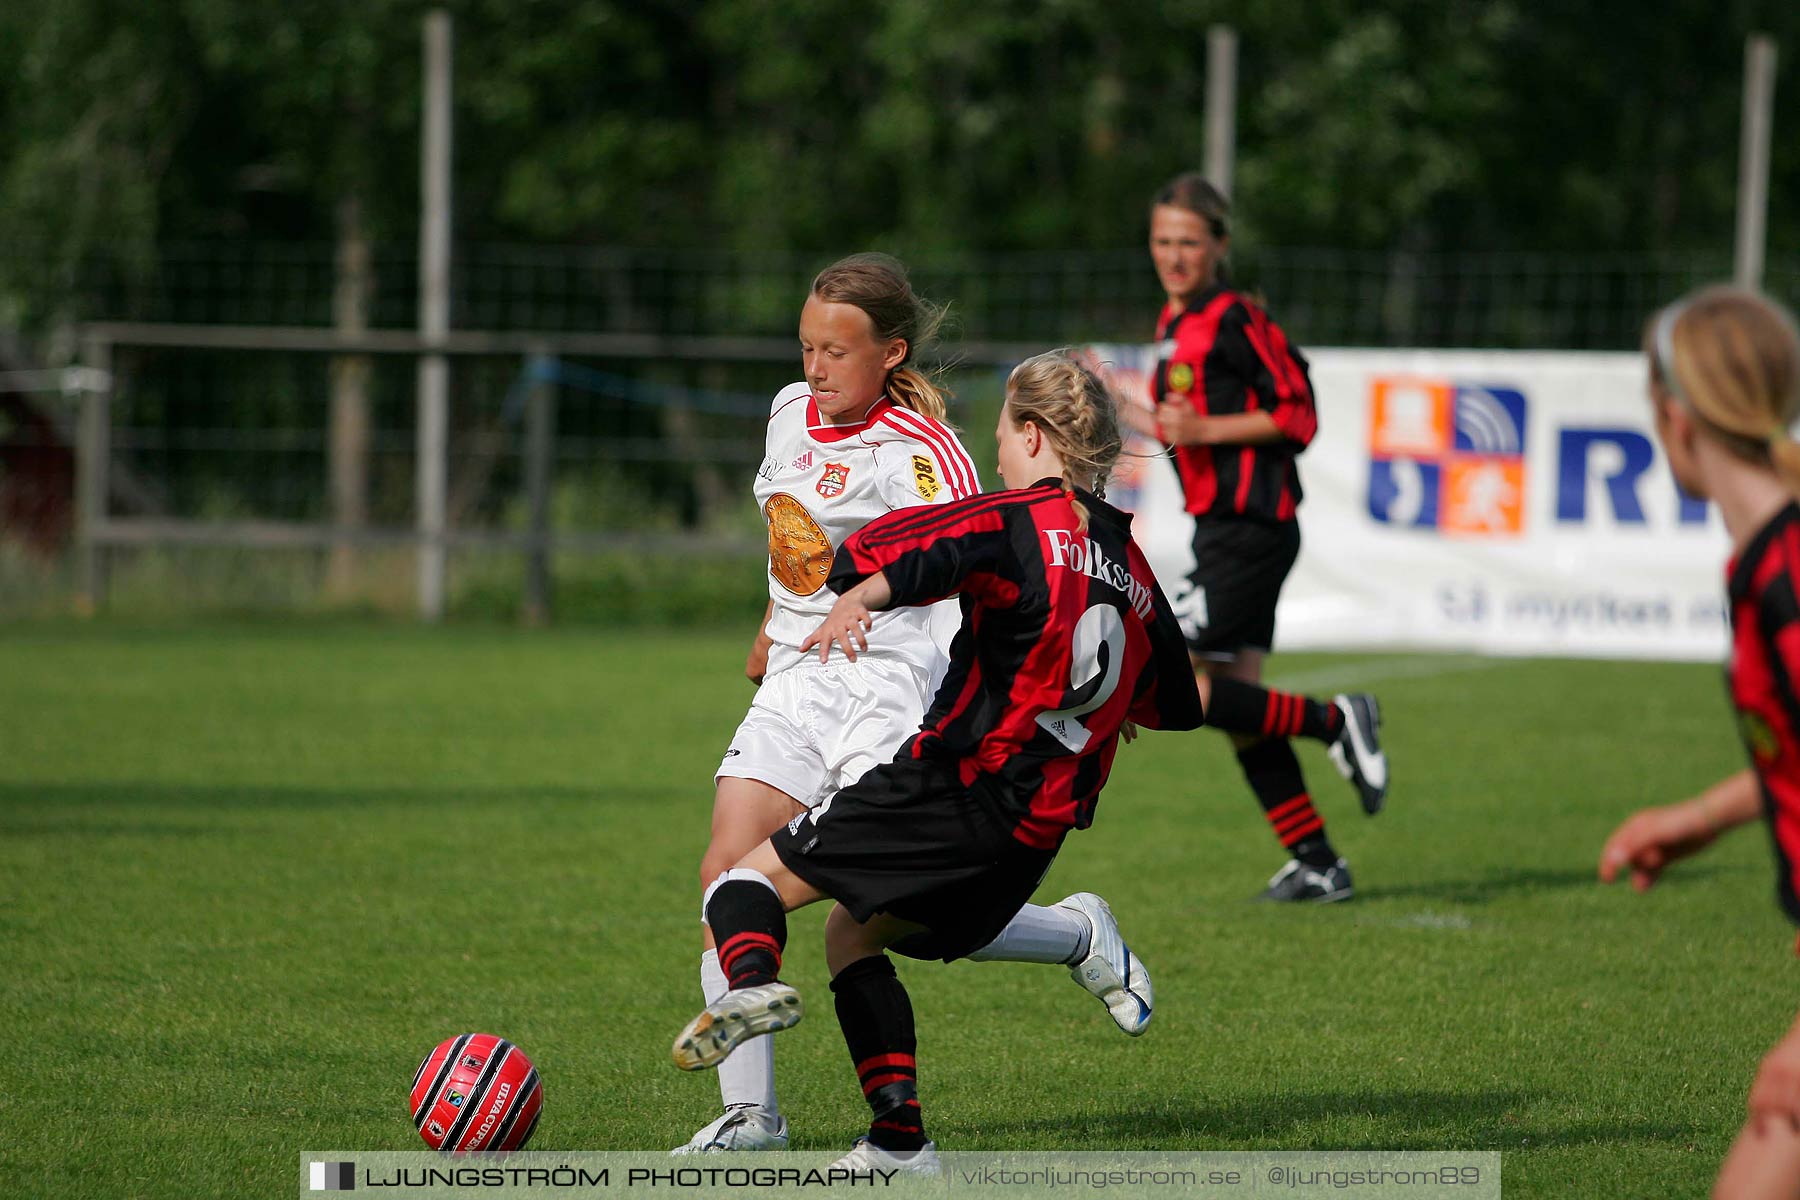 Ulvacupen 2006,mix,Åbrovallen,Ulvåker,Sverige,Fotboll,,2006,147369